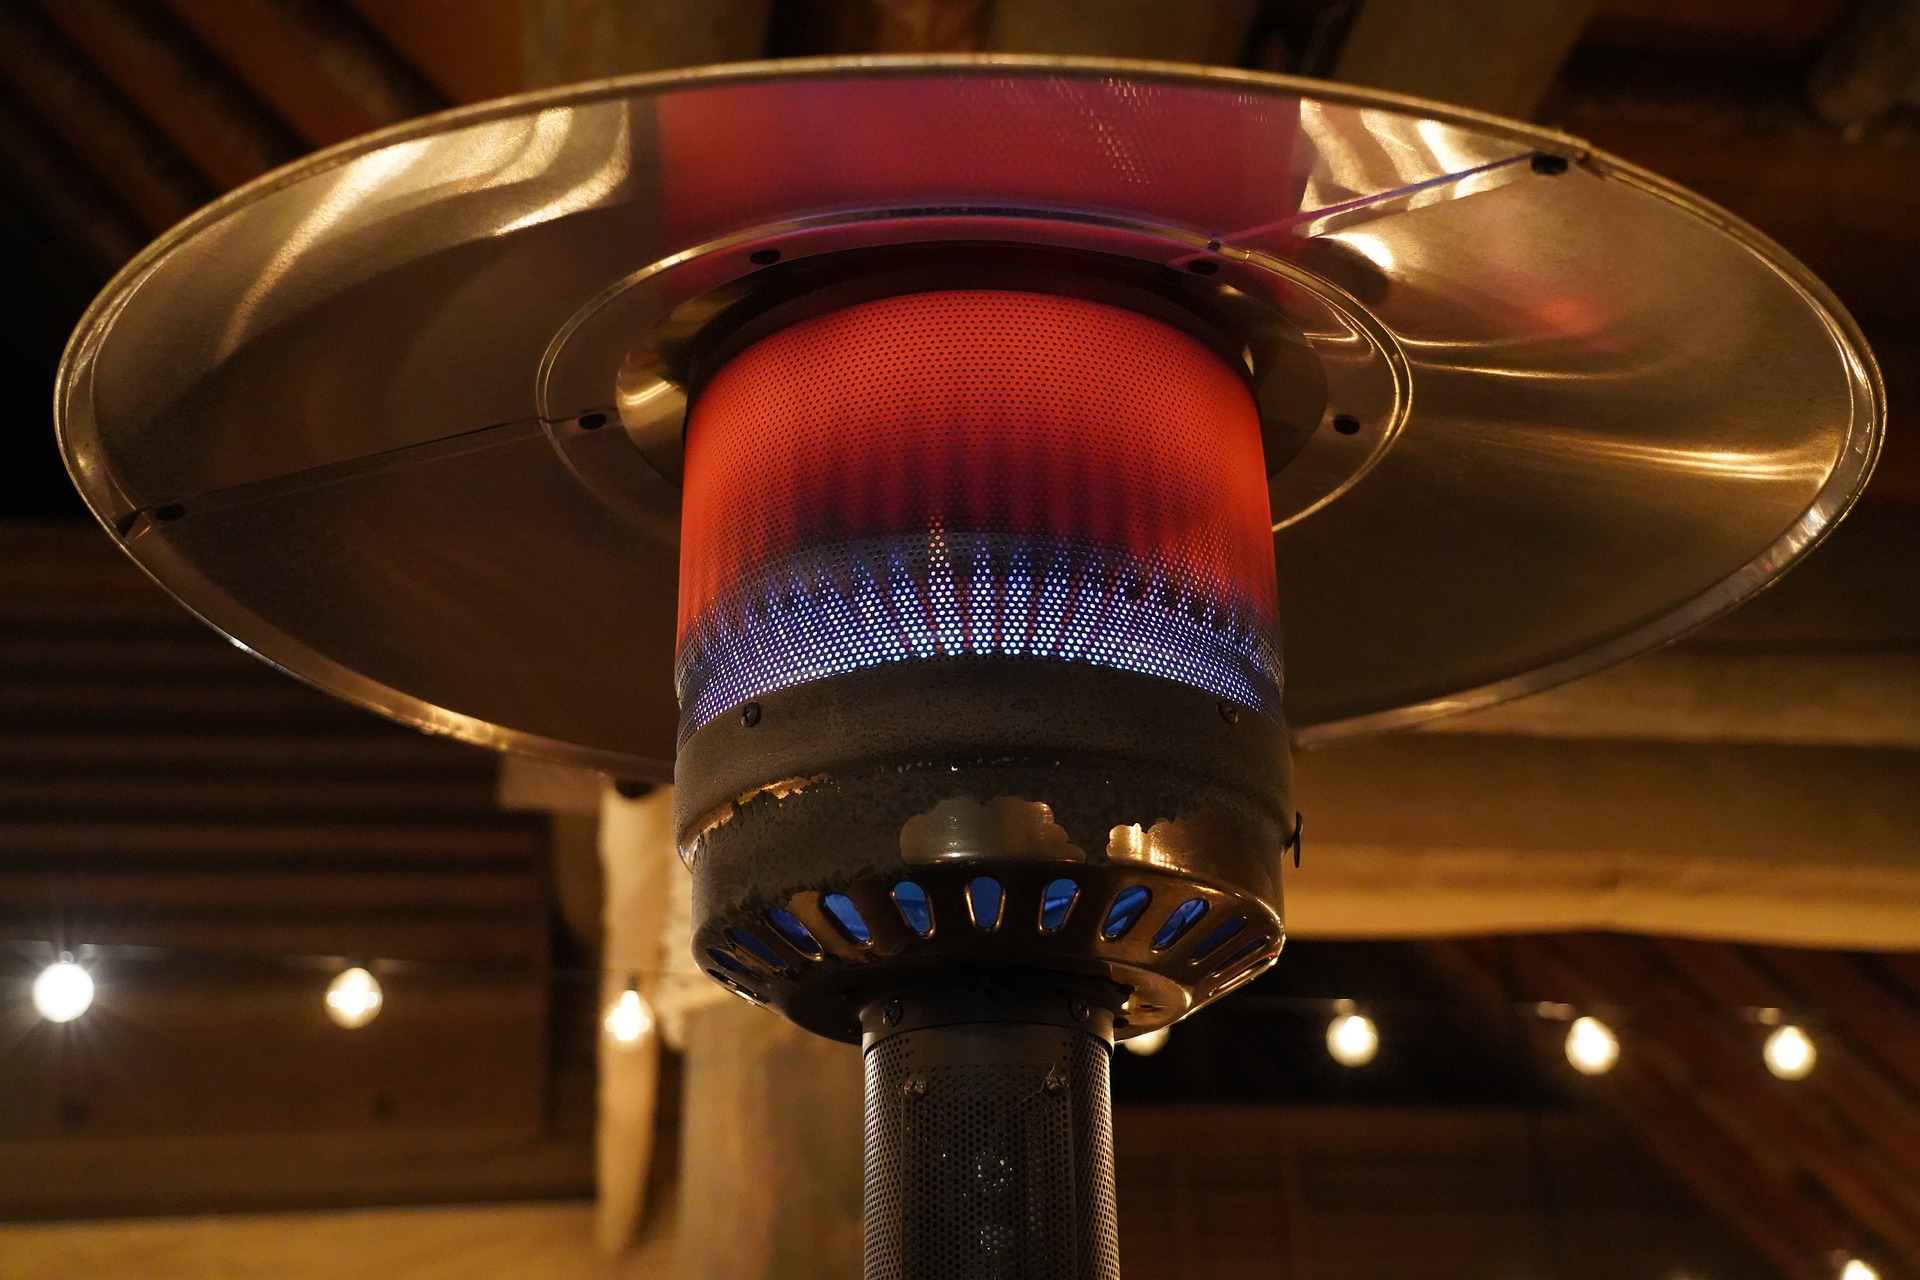 propane-heater-4413300_1920